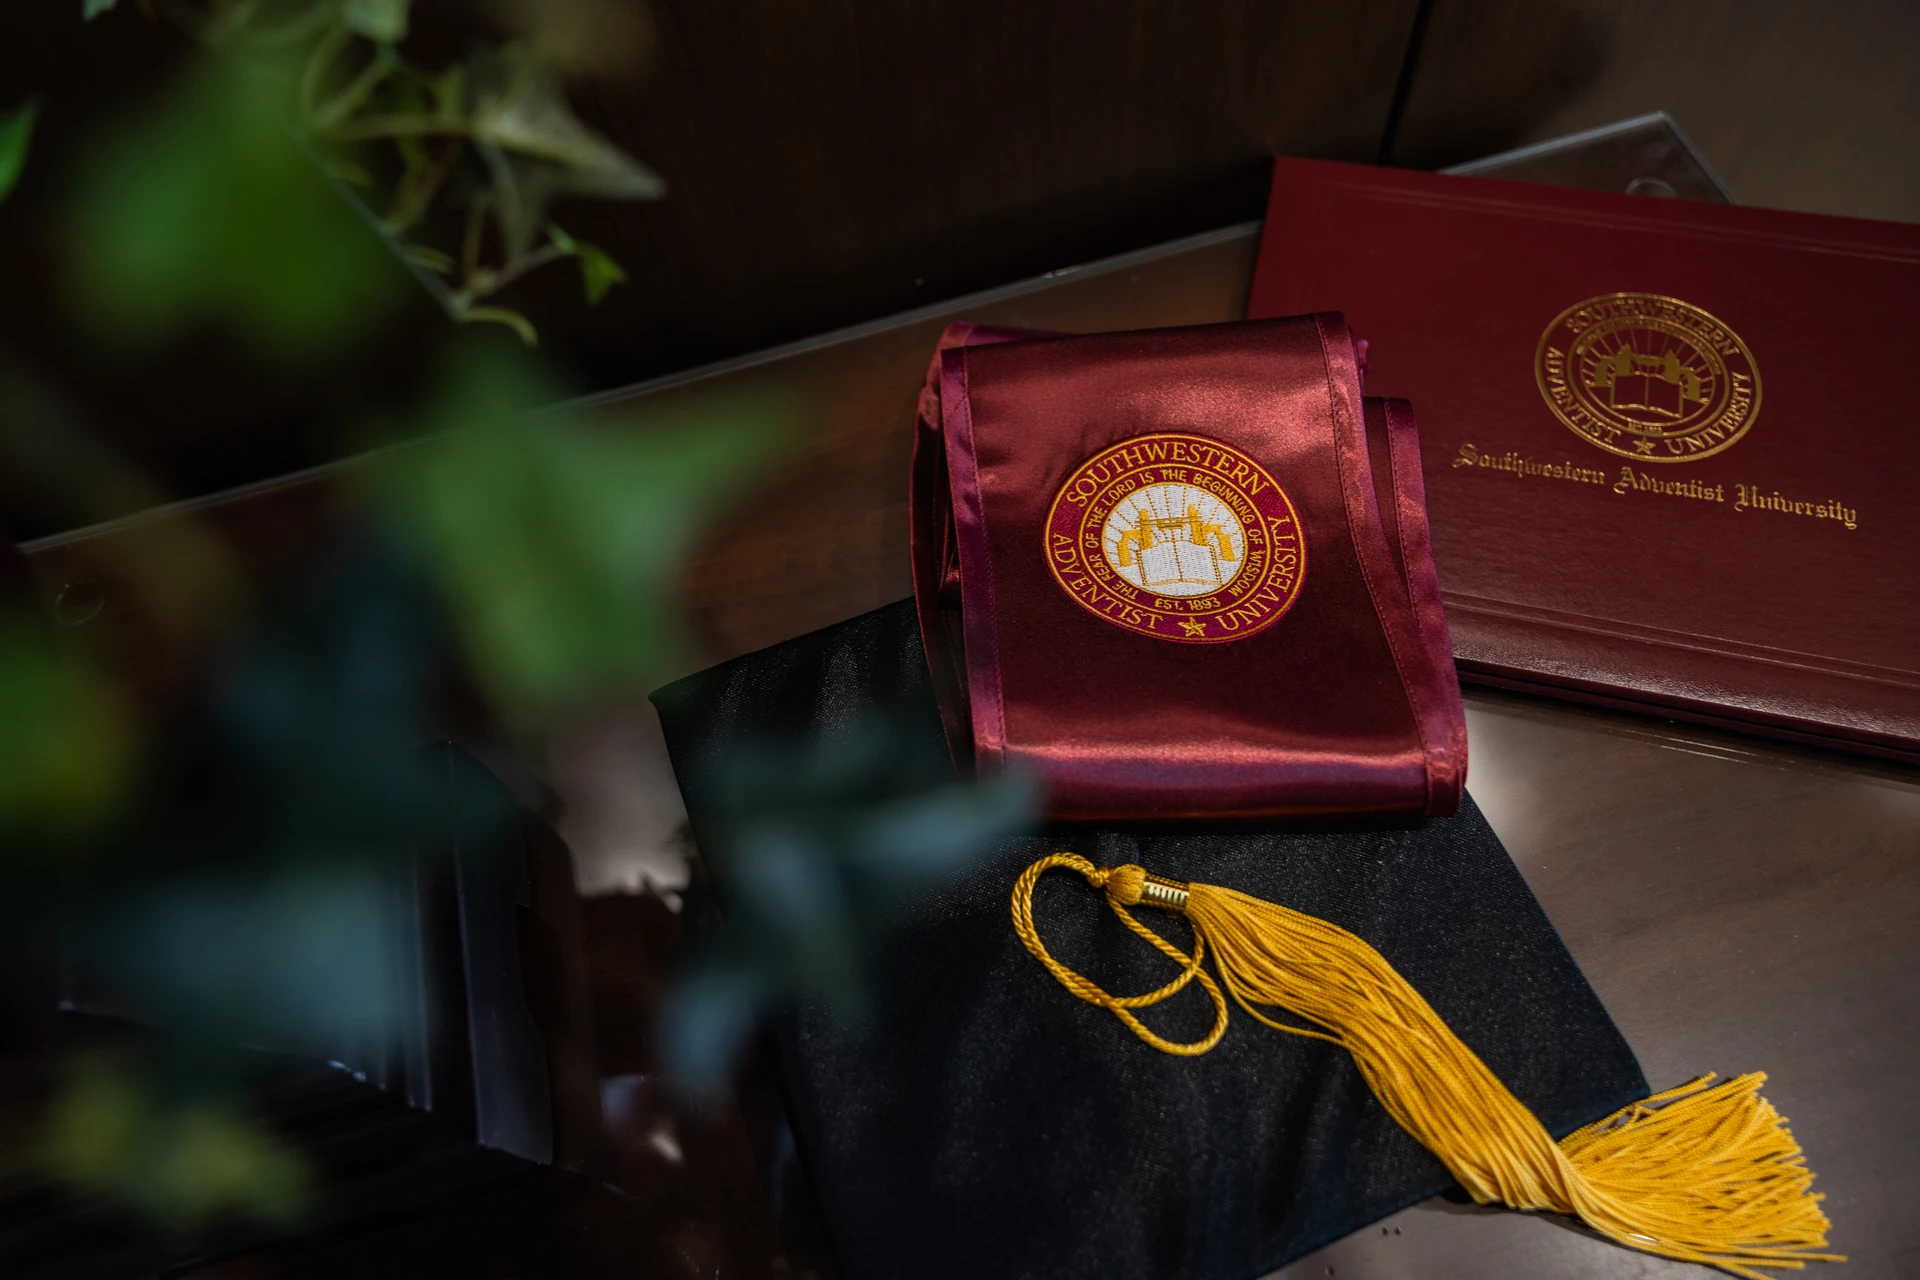 SWAU graduation sash and diploma